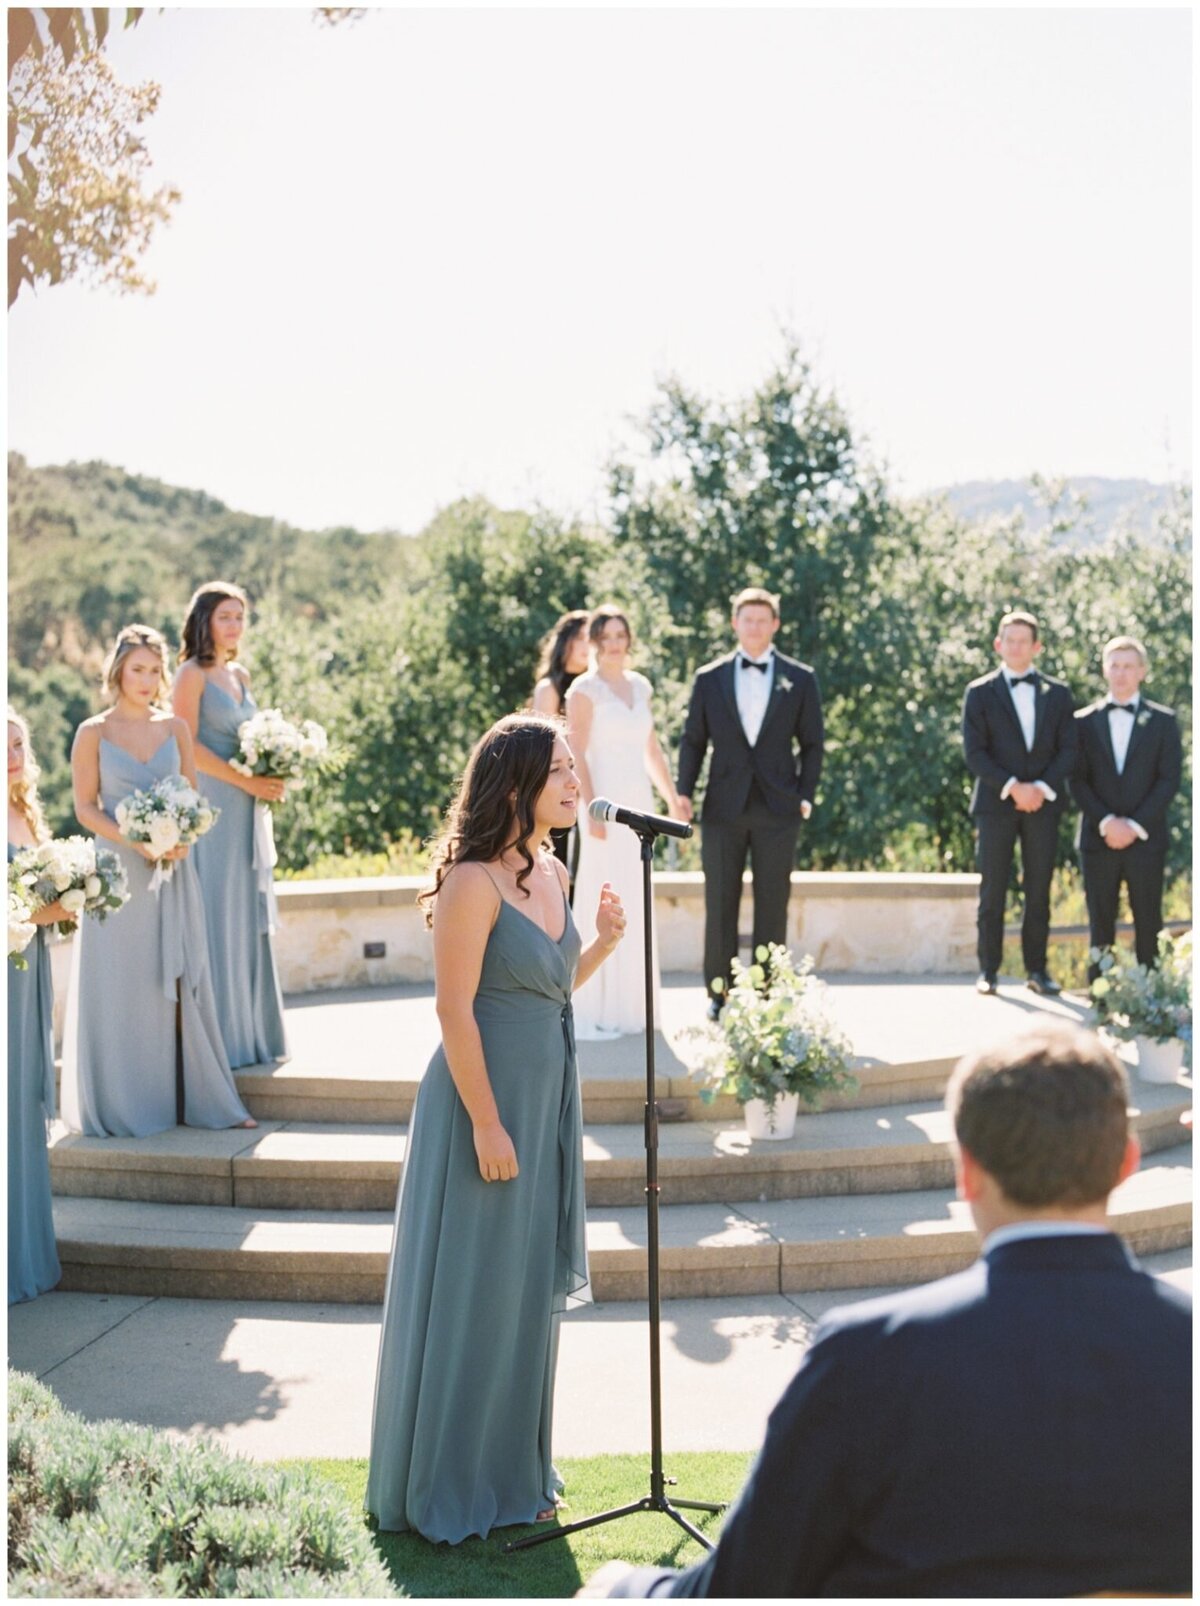 Katie-Jordan-Carmel-Valley-Holman-Ranch-Wedding-Cassie-Valente-Photography-0575-1530x2048